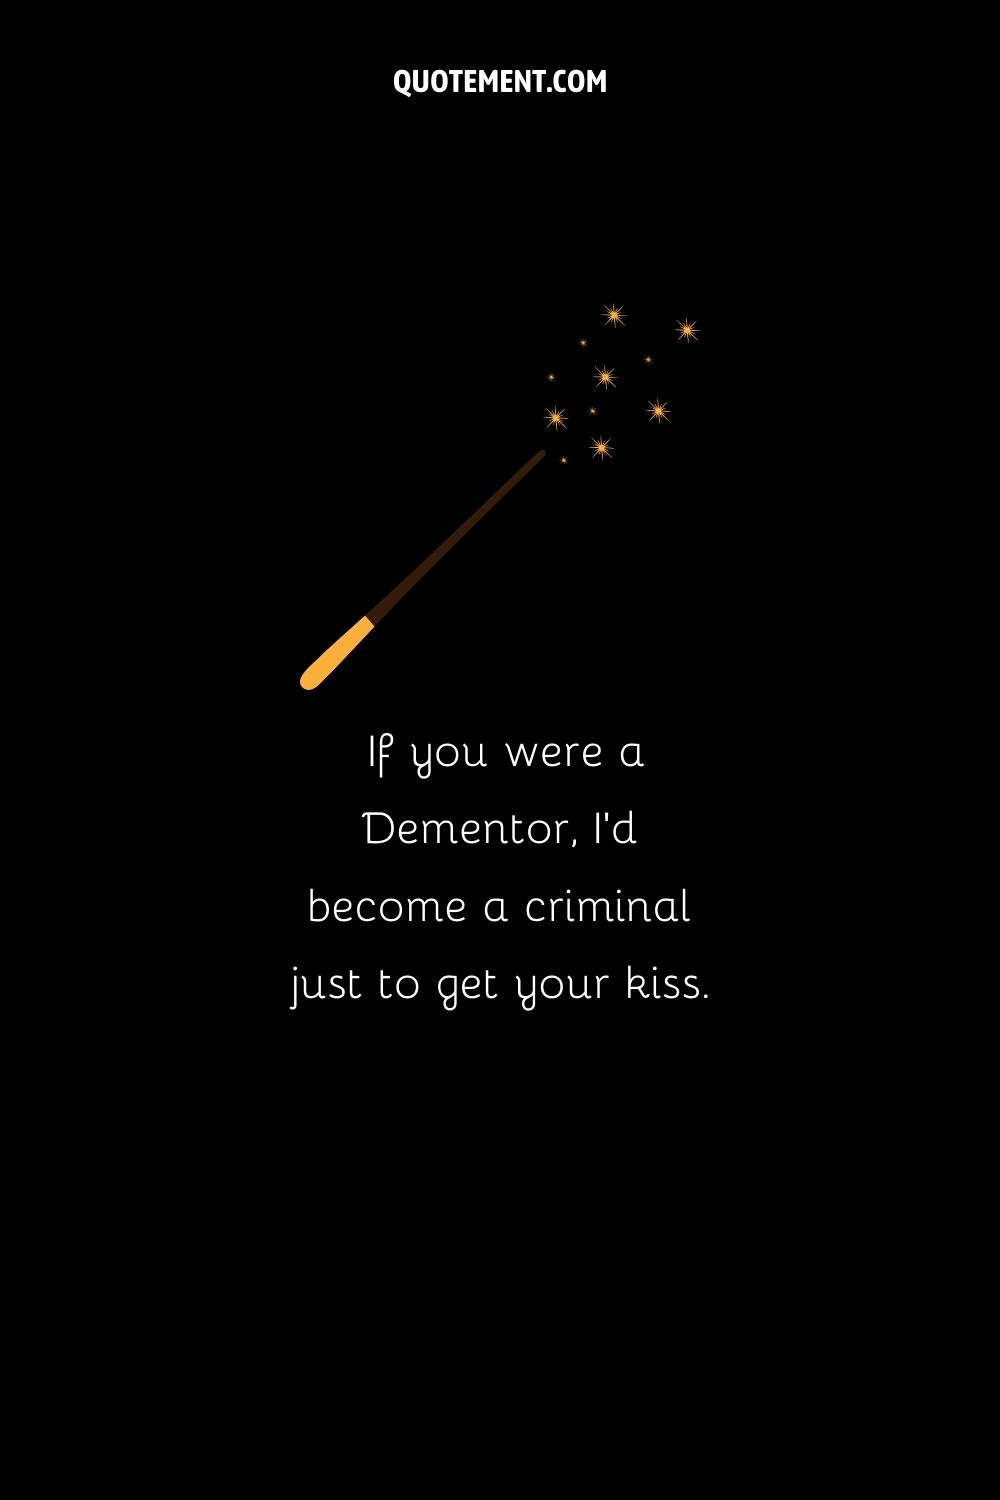 simple magic wand illustration representing Kiss pick up line
